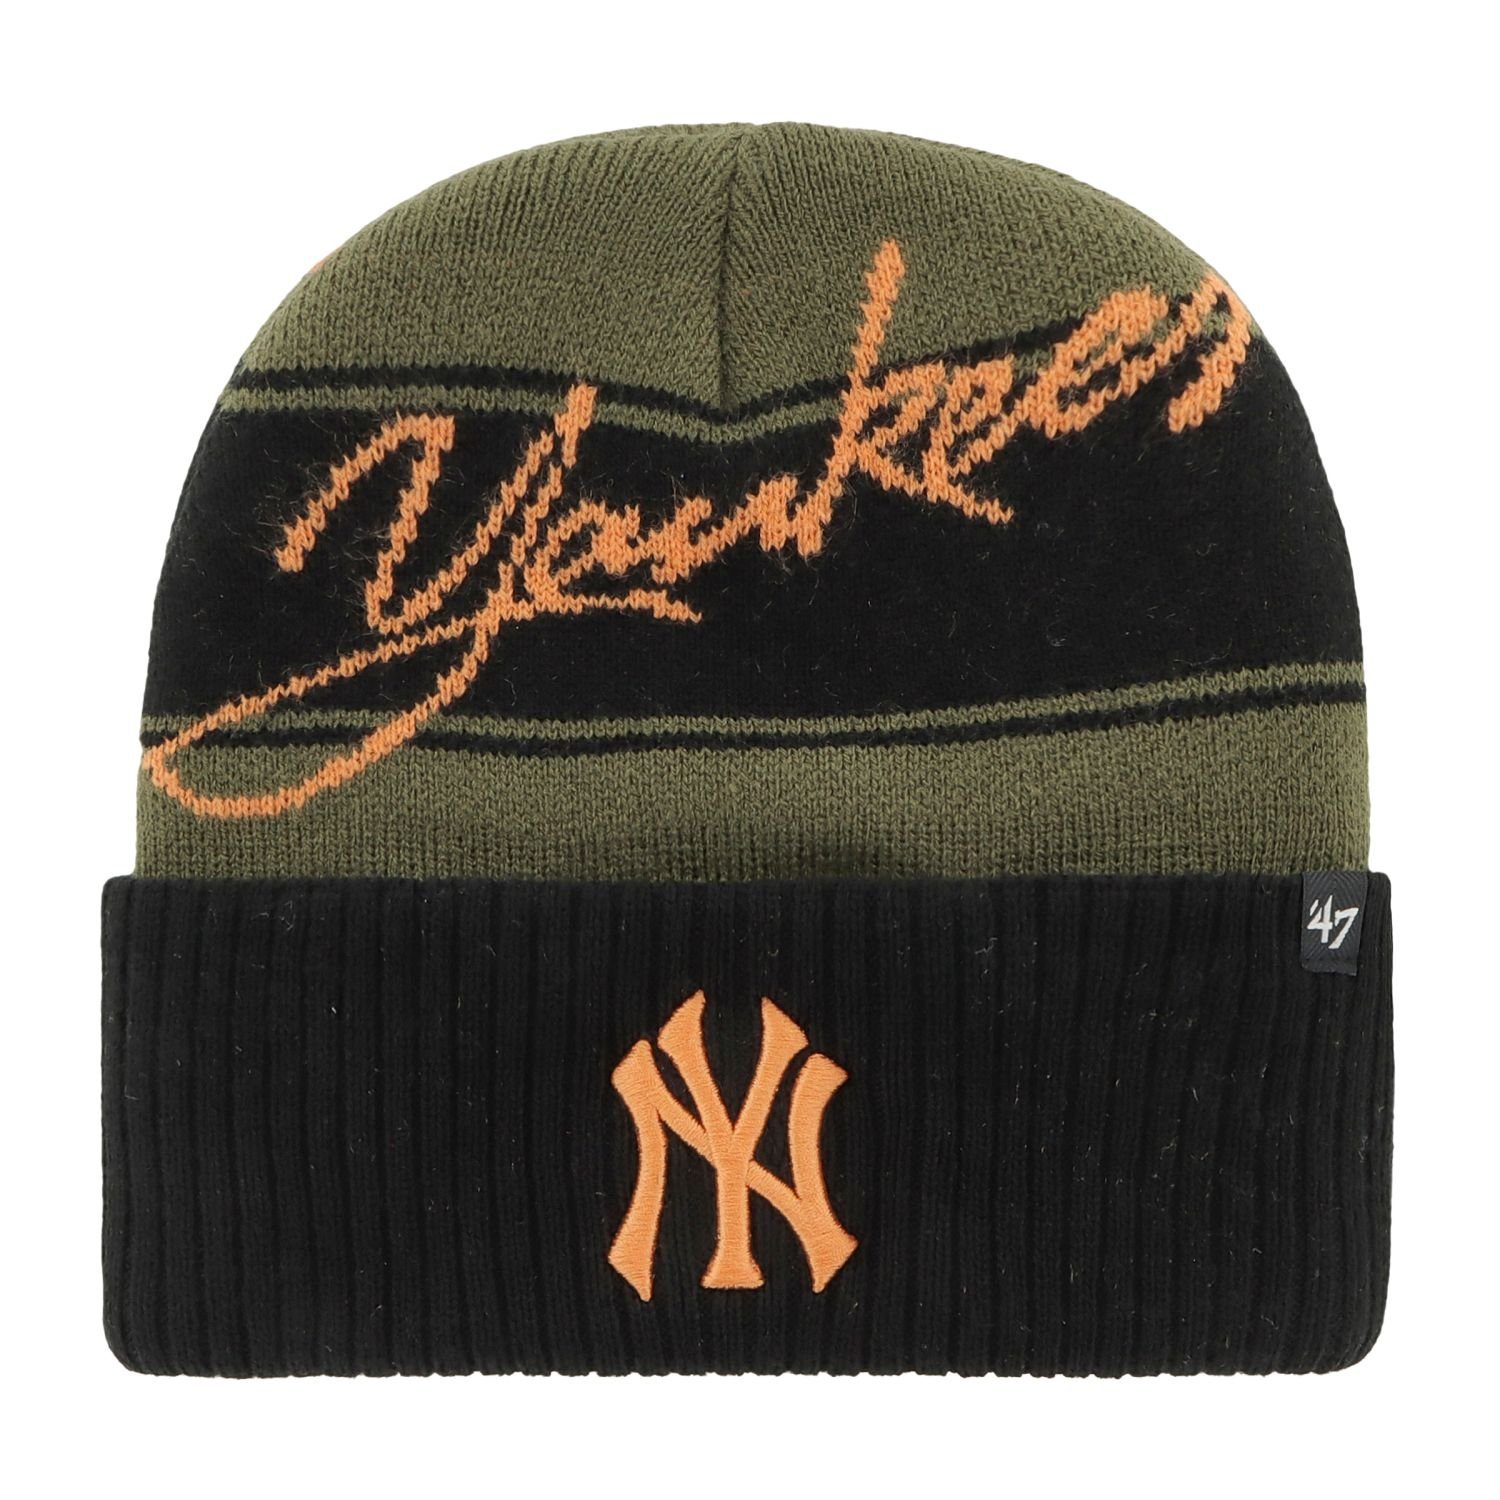 '47 Brand Fleecemütze Beanie ITALIC New York Yankees